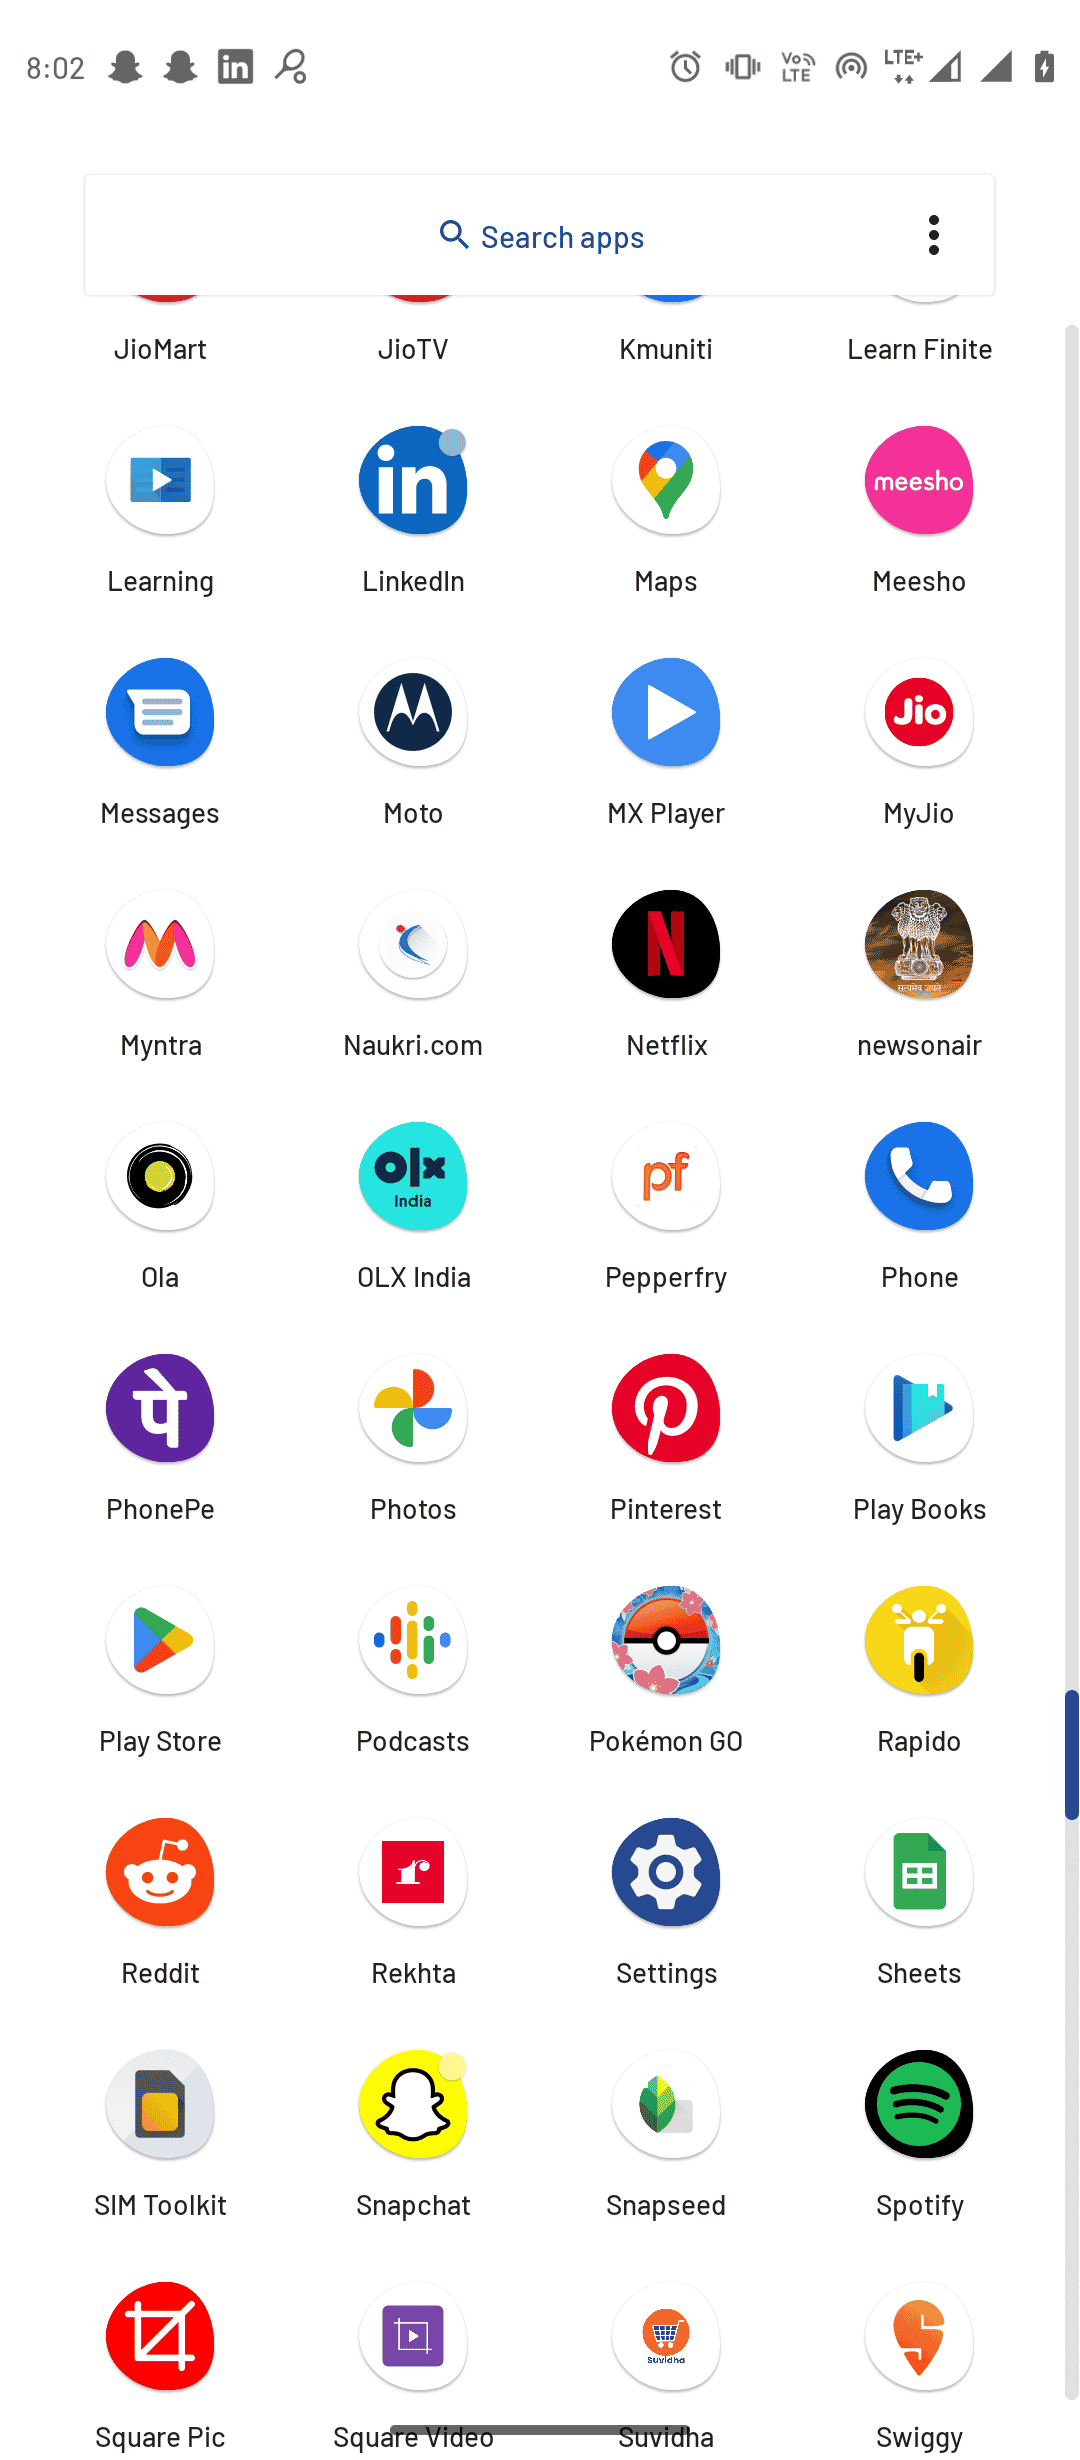 Google Play Store iepenje